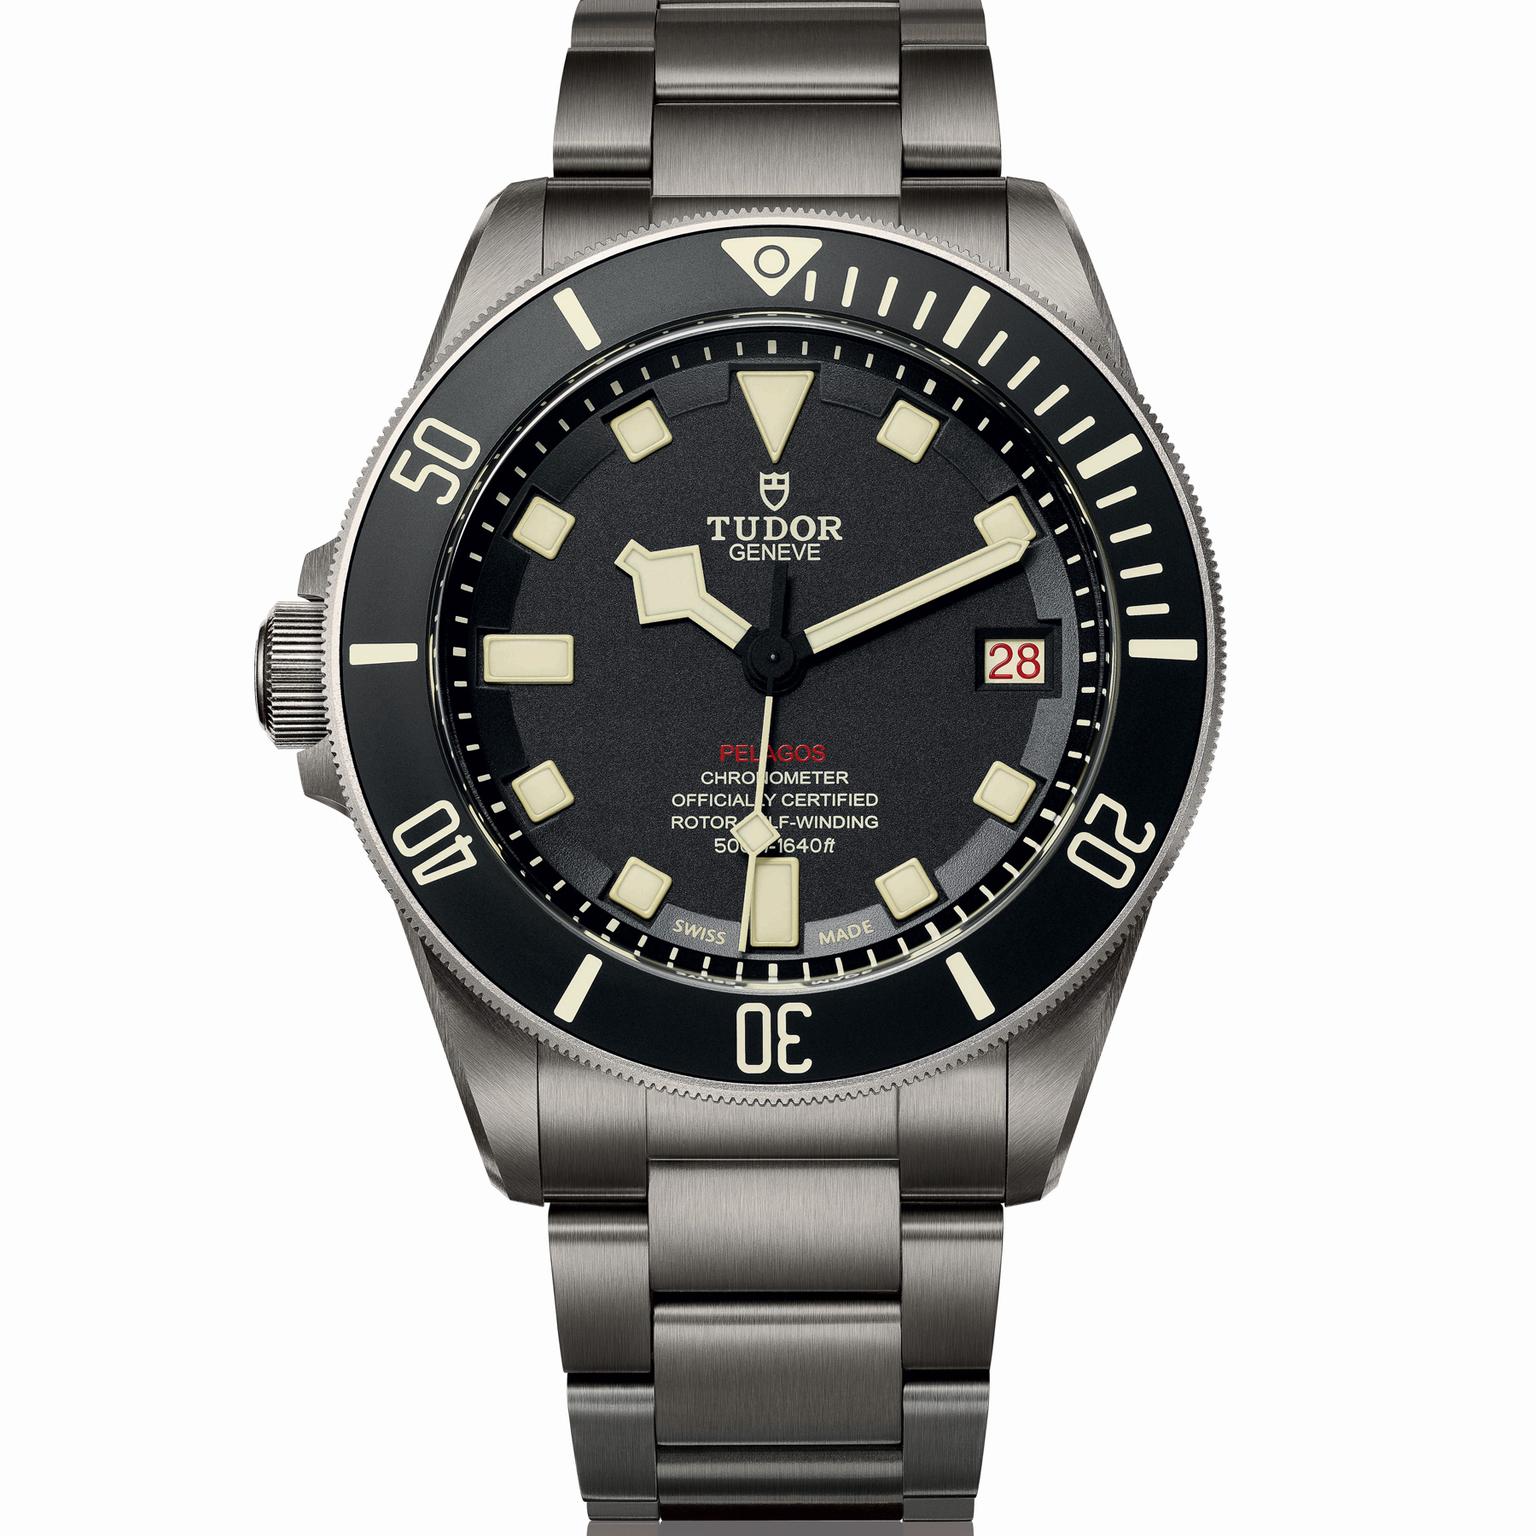 Tudor Pelagos LHD watch dial